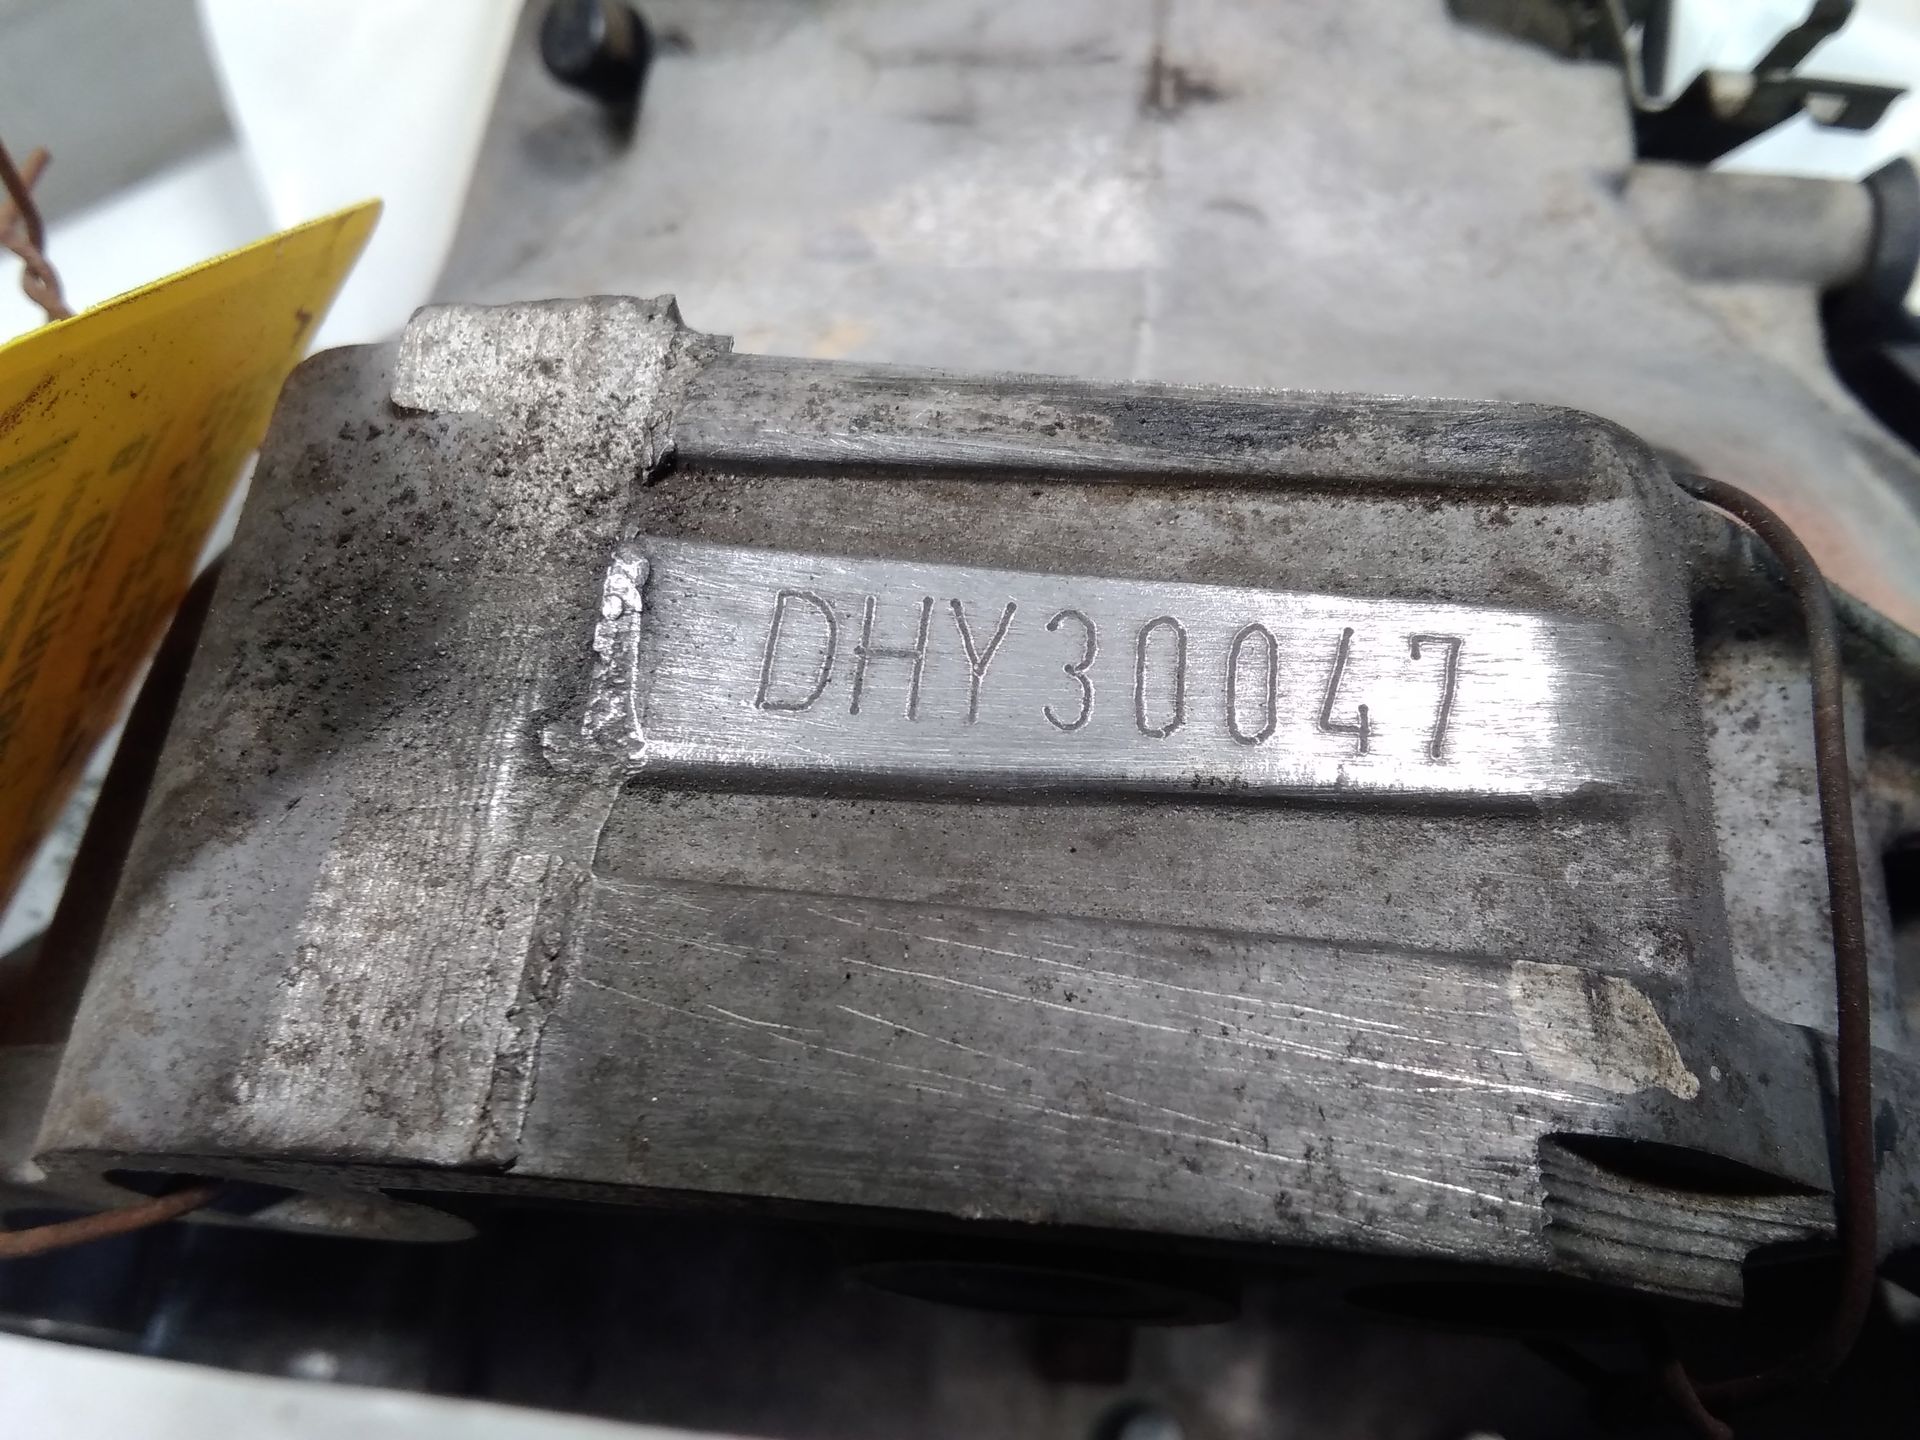 Audi A6 4B original Schaltgetriebe 5 Gang DHY 2.8 V6 142kw